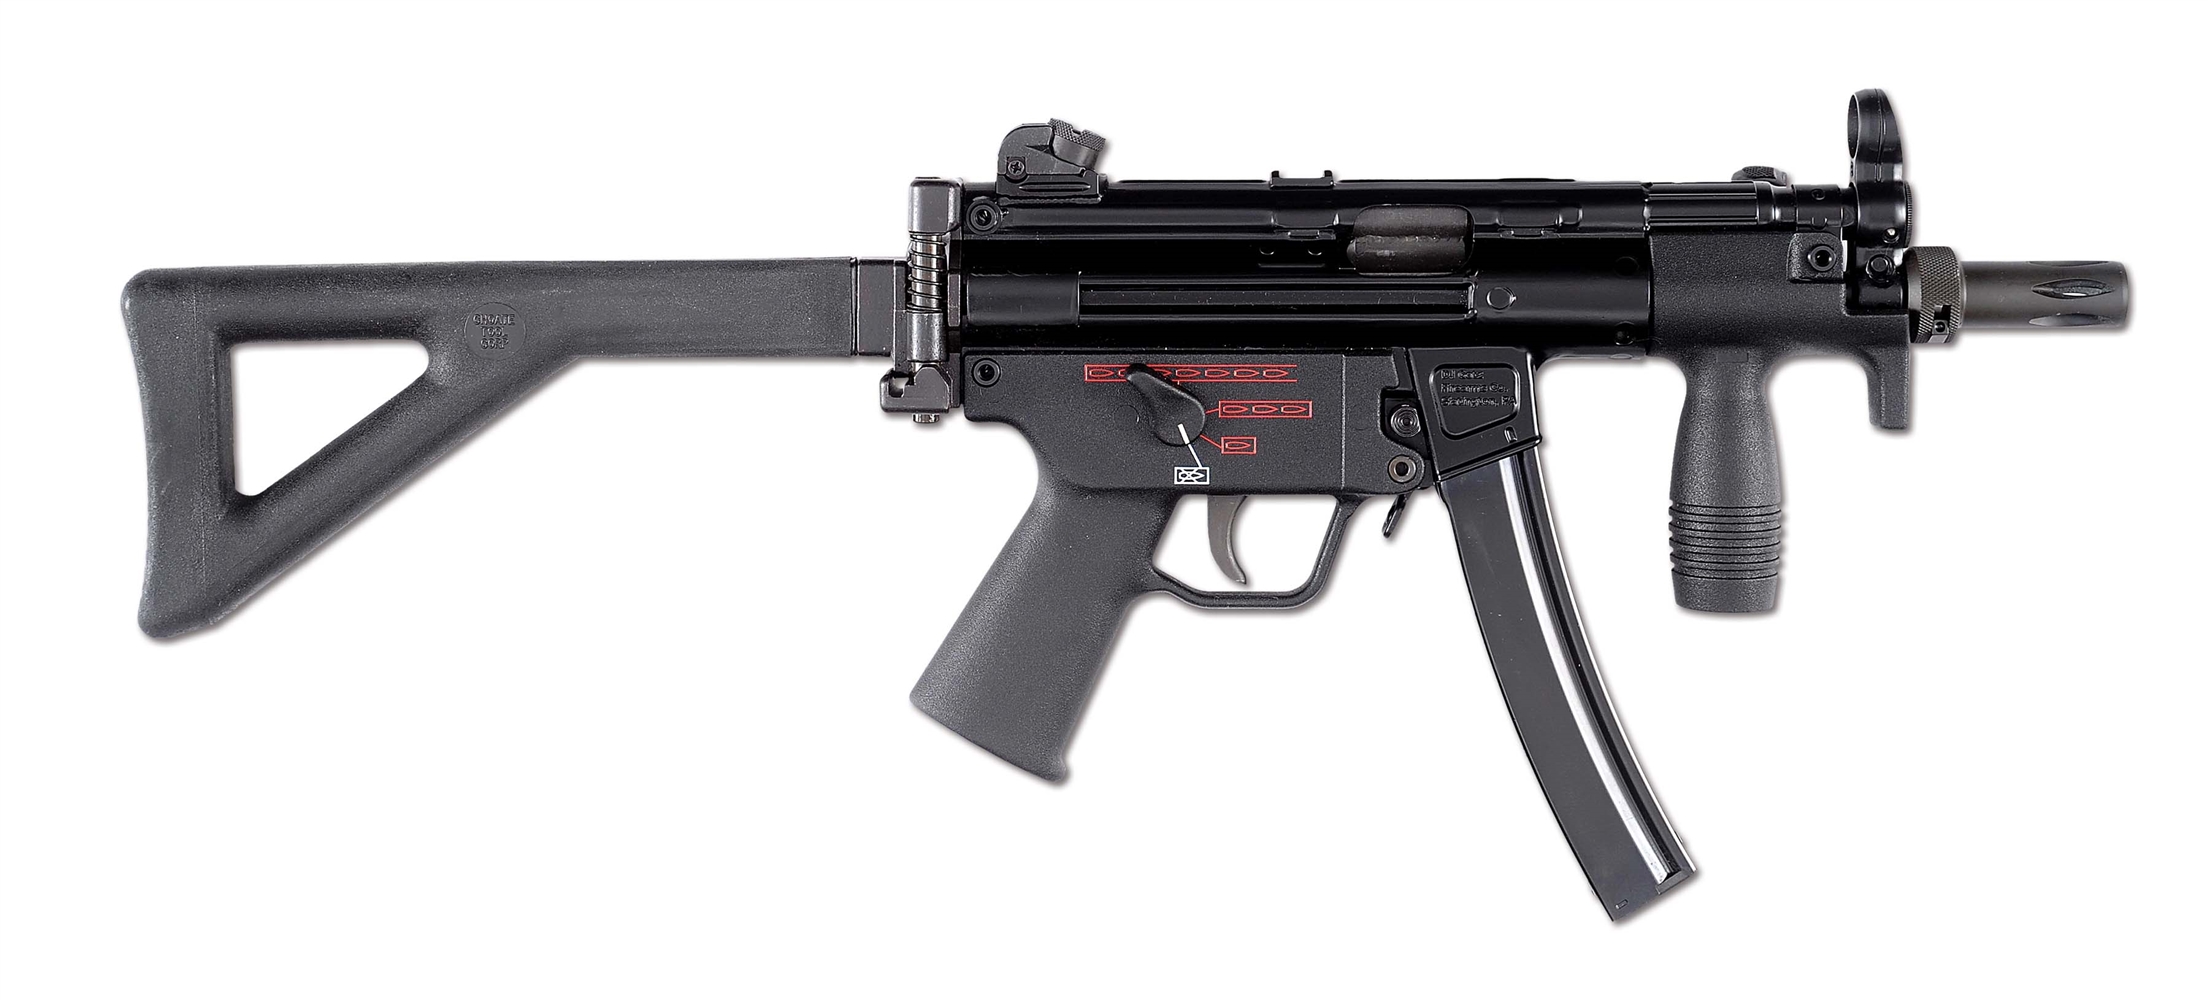 (N) FANTASTIC MACHINE GUN PLATFORM FLEMING REGISTERED H&K AUTO-SEAR ON PACK SHORT DF89K HOST GUN (FULLY TRANSFERABLE).